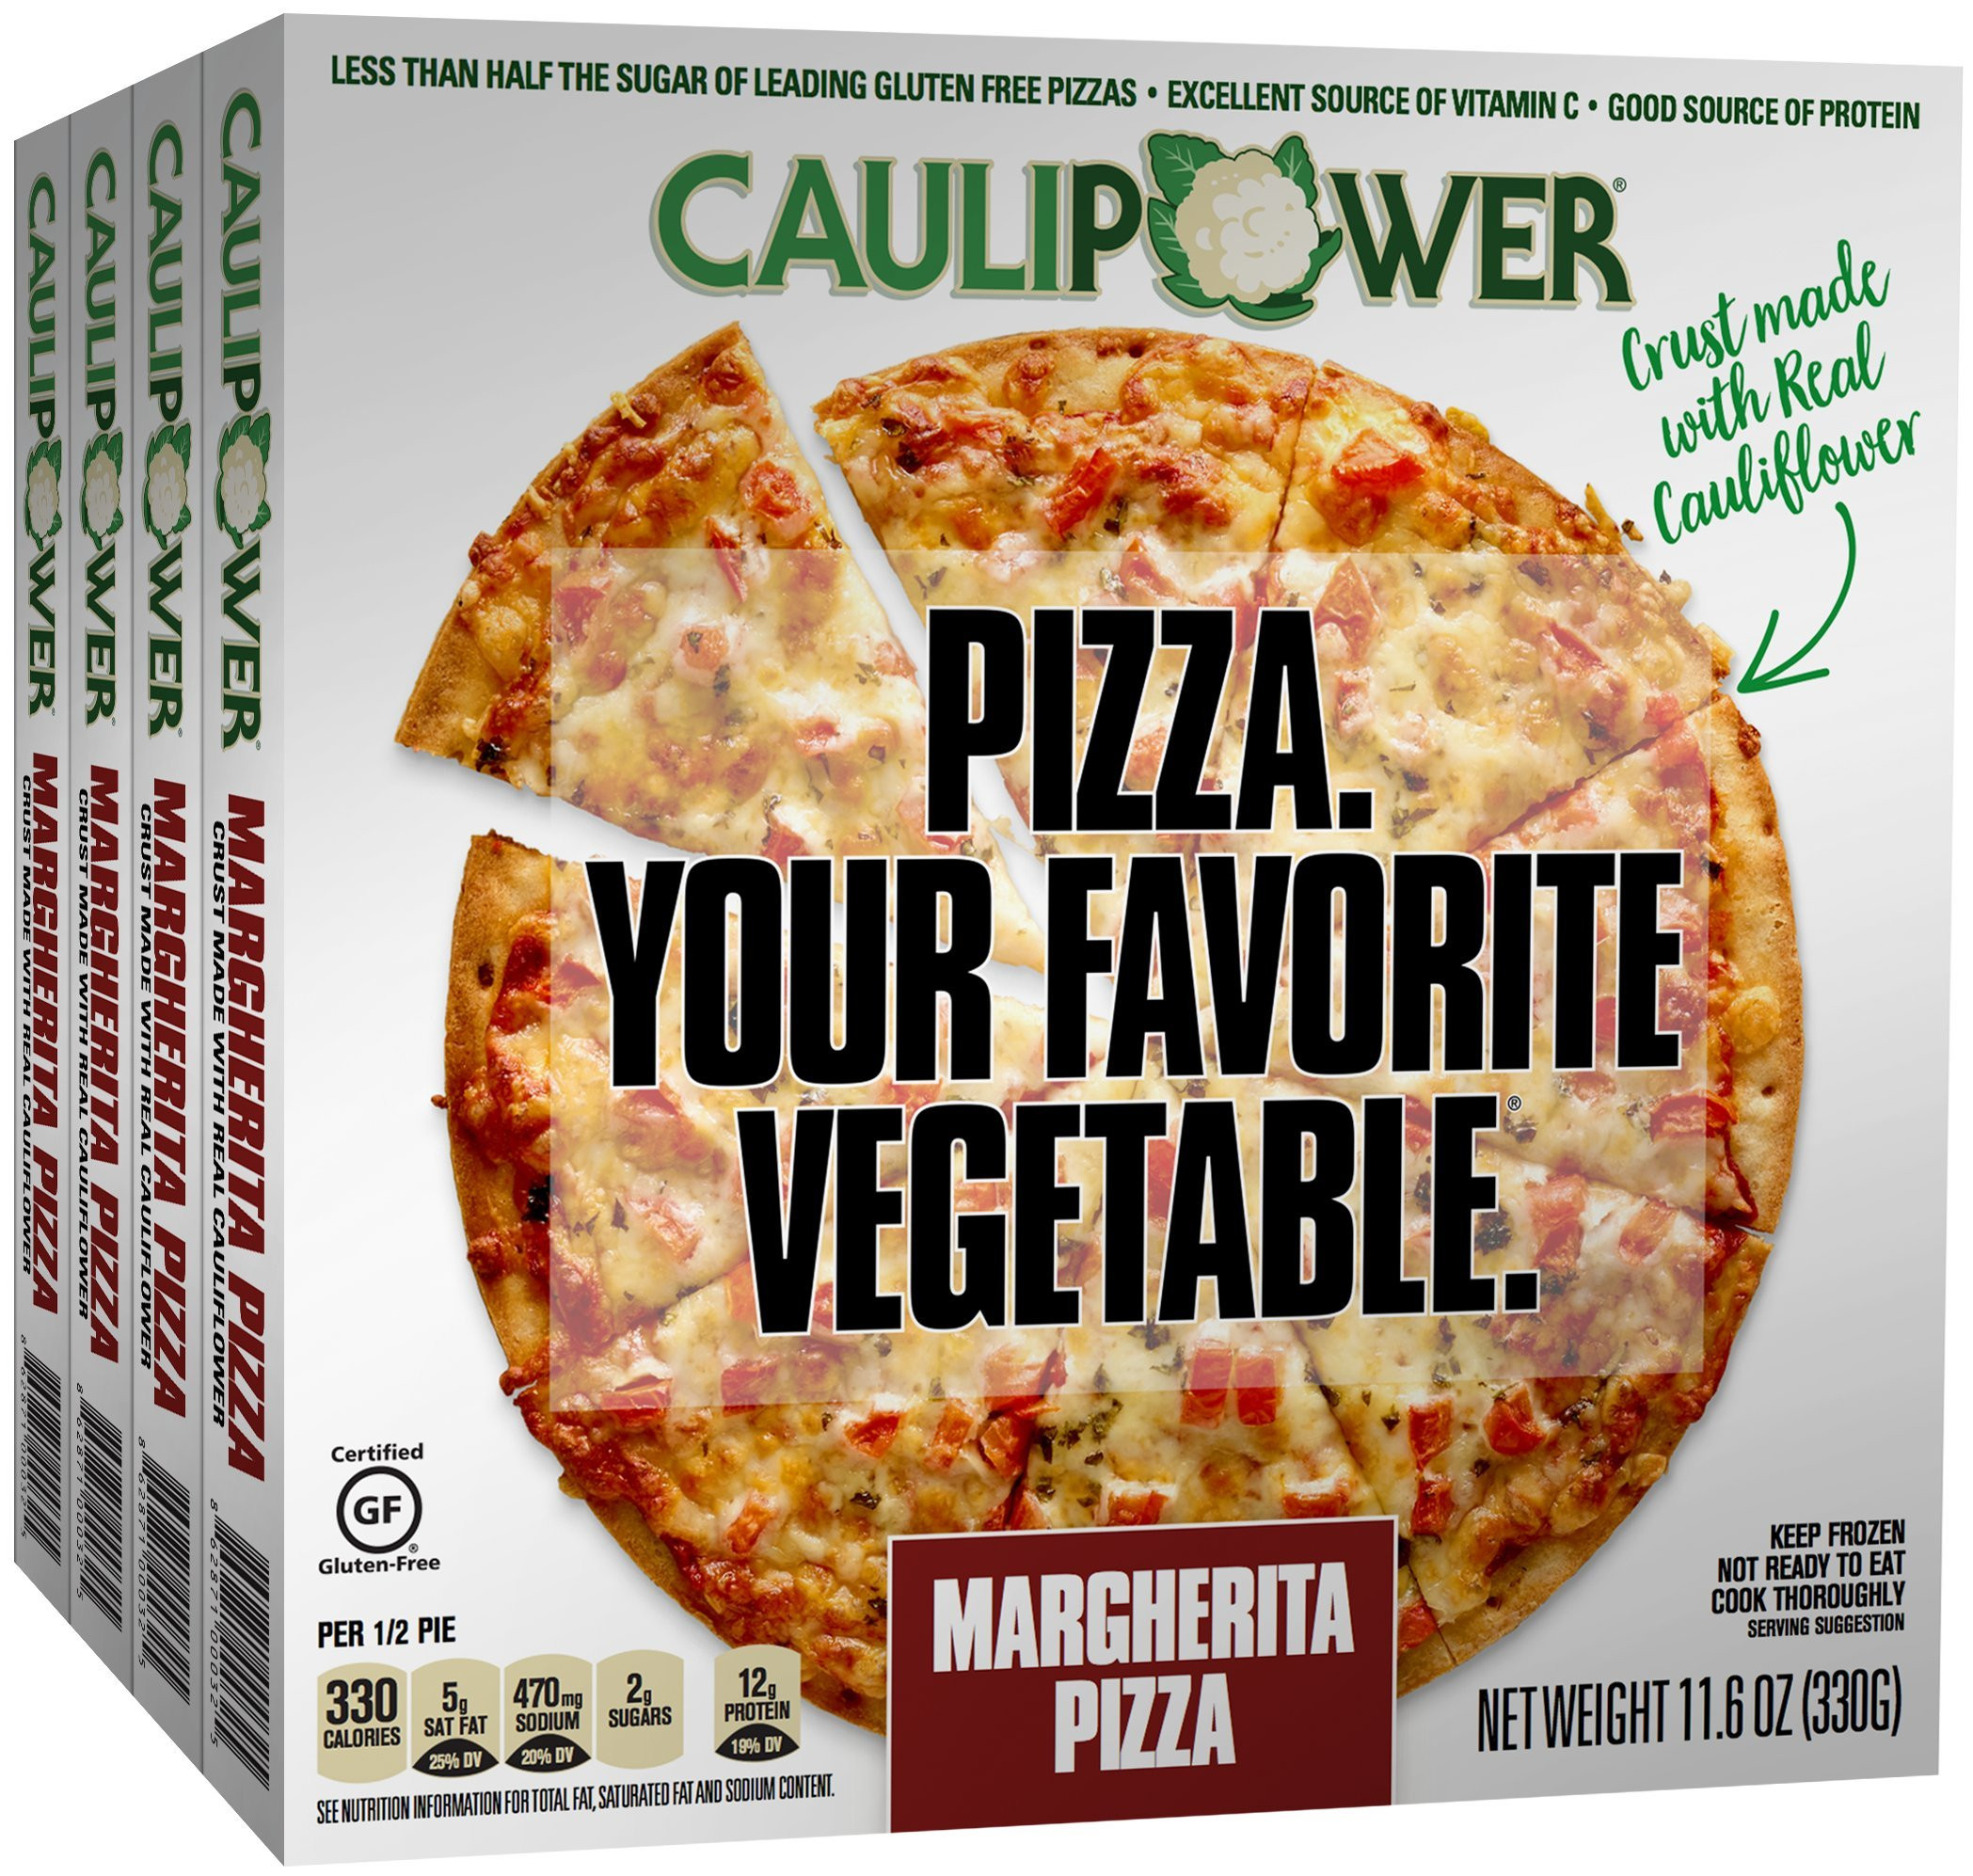 Cauliflower Pizza Crust Publix
 Costco Margherita Pizza Nutrition Facts